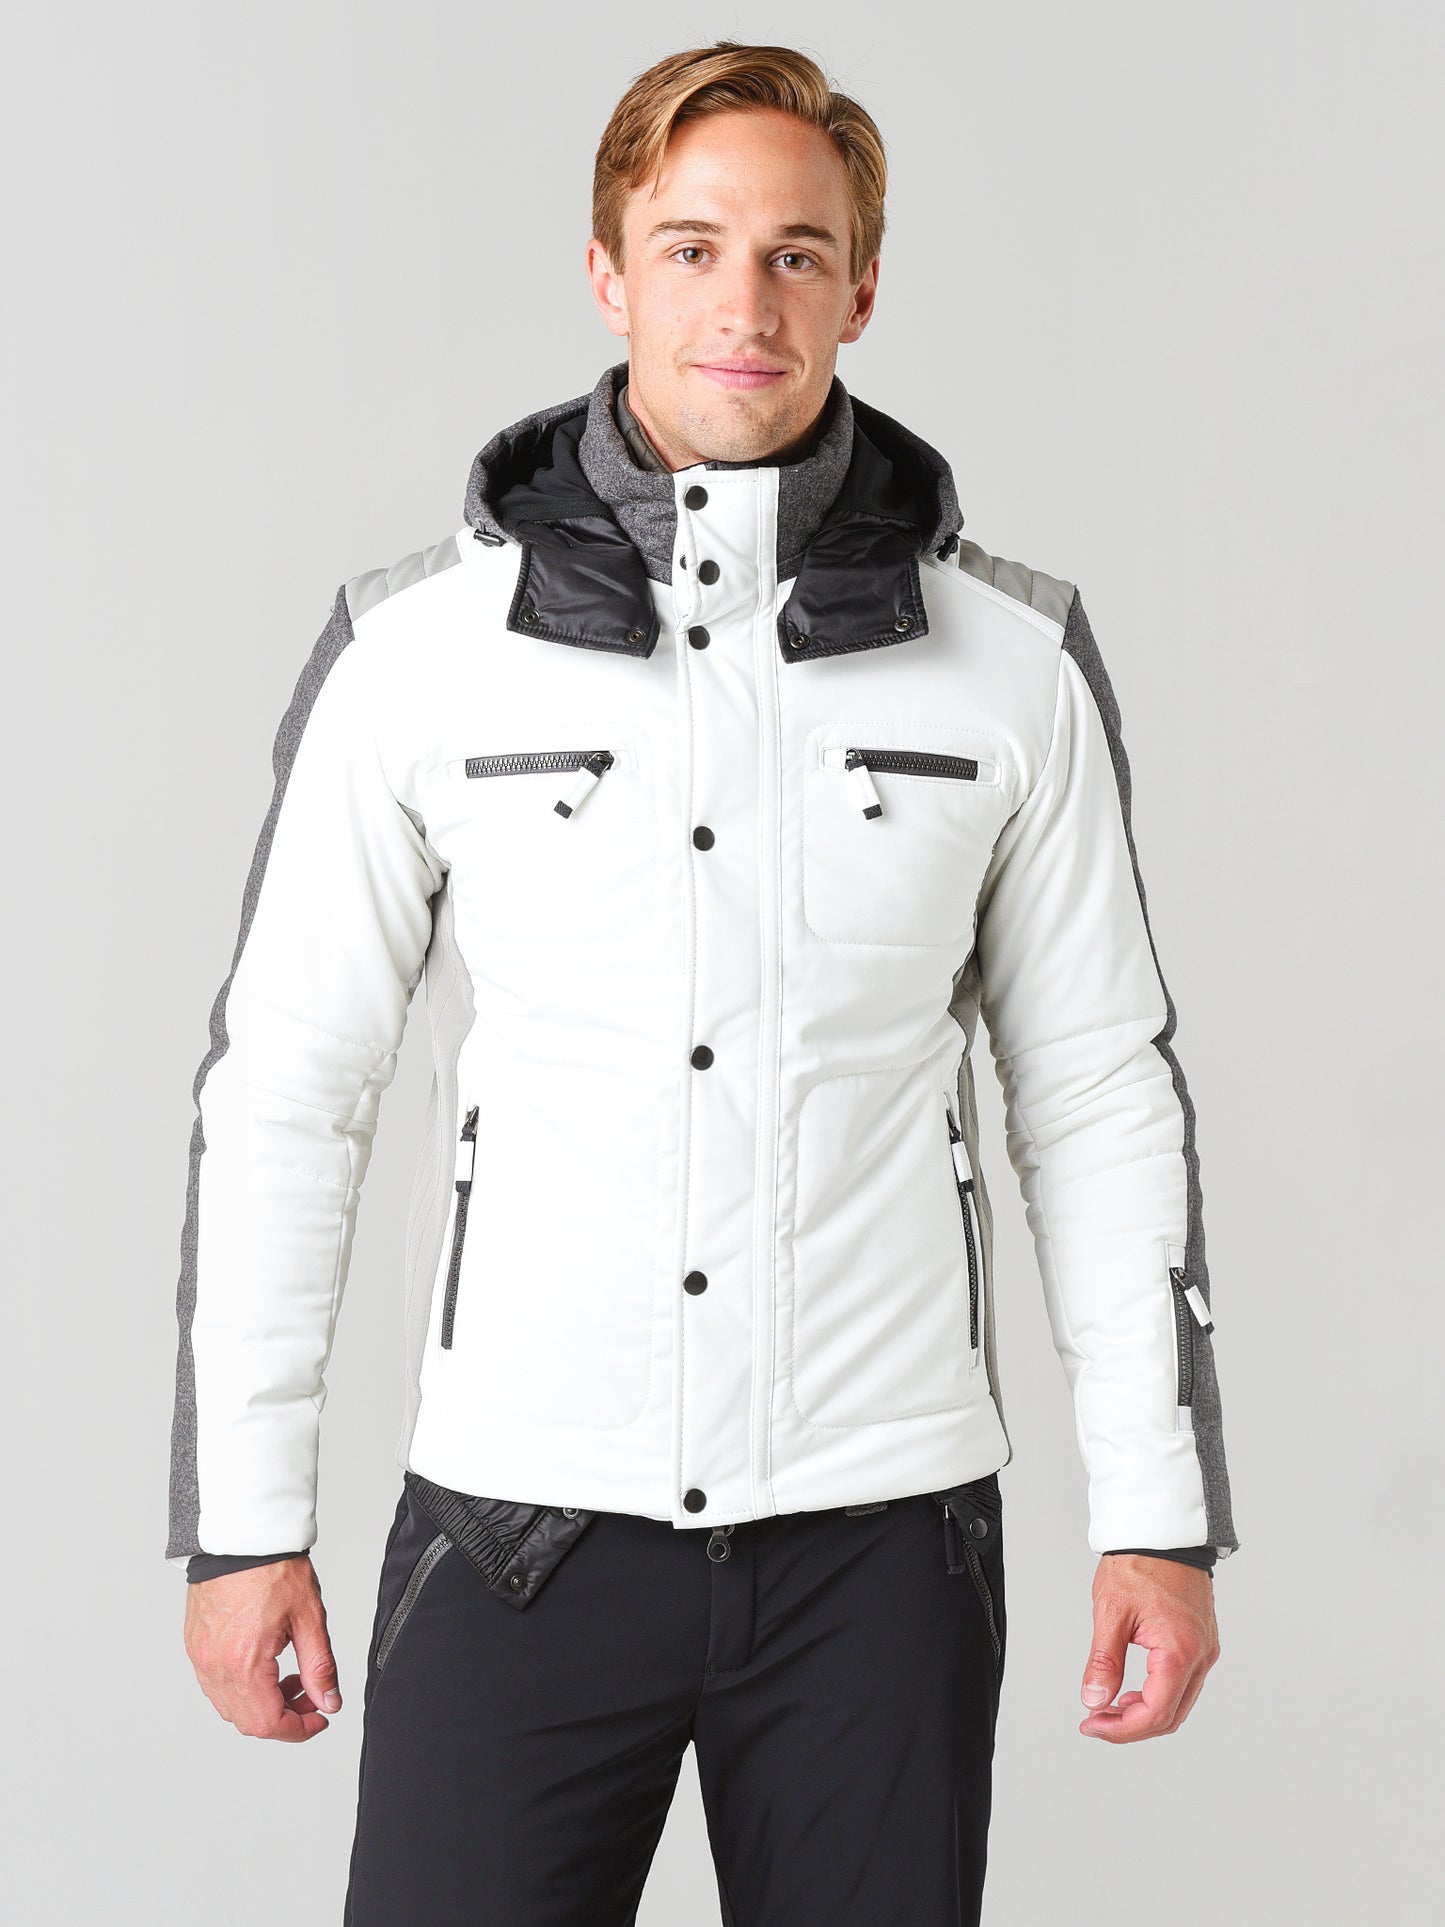 Frauenschuh Men's Dan Multi Ski Jacket